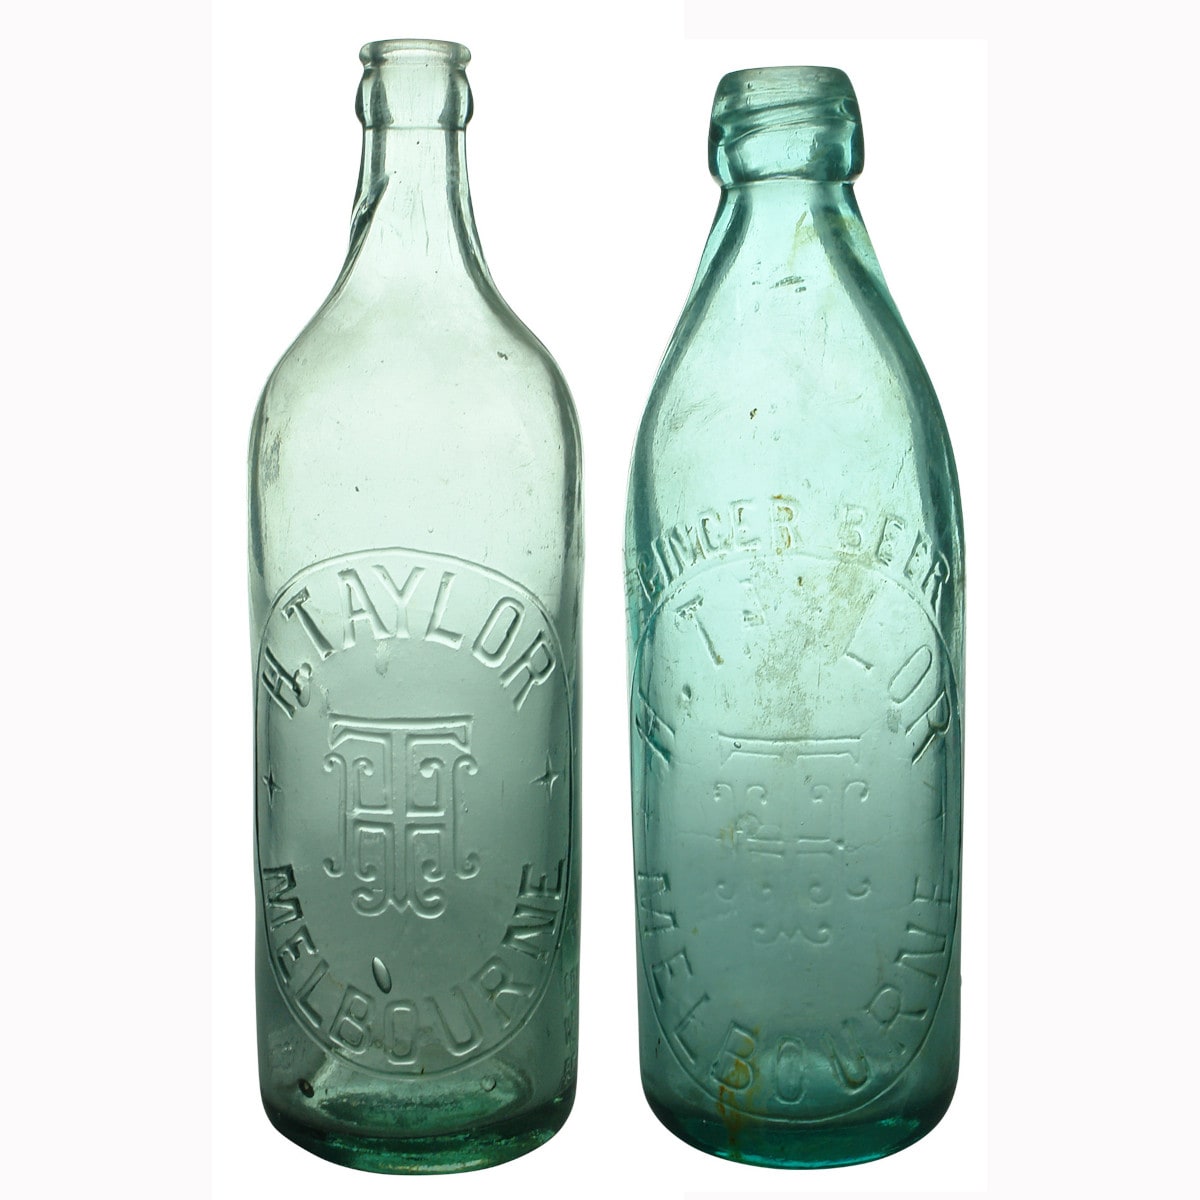 Pair of Taylor Melbourne Bottles.